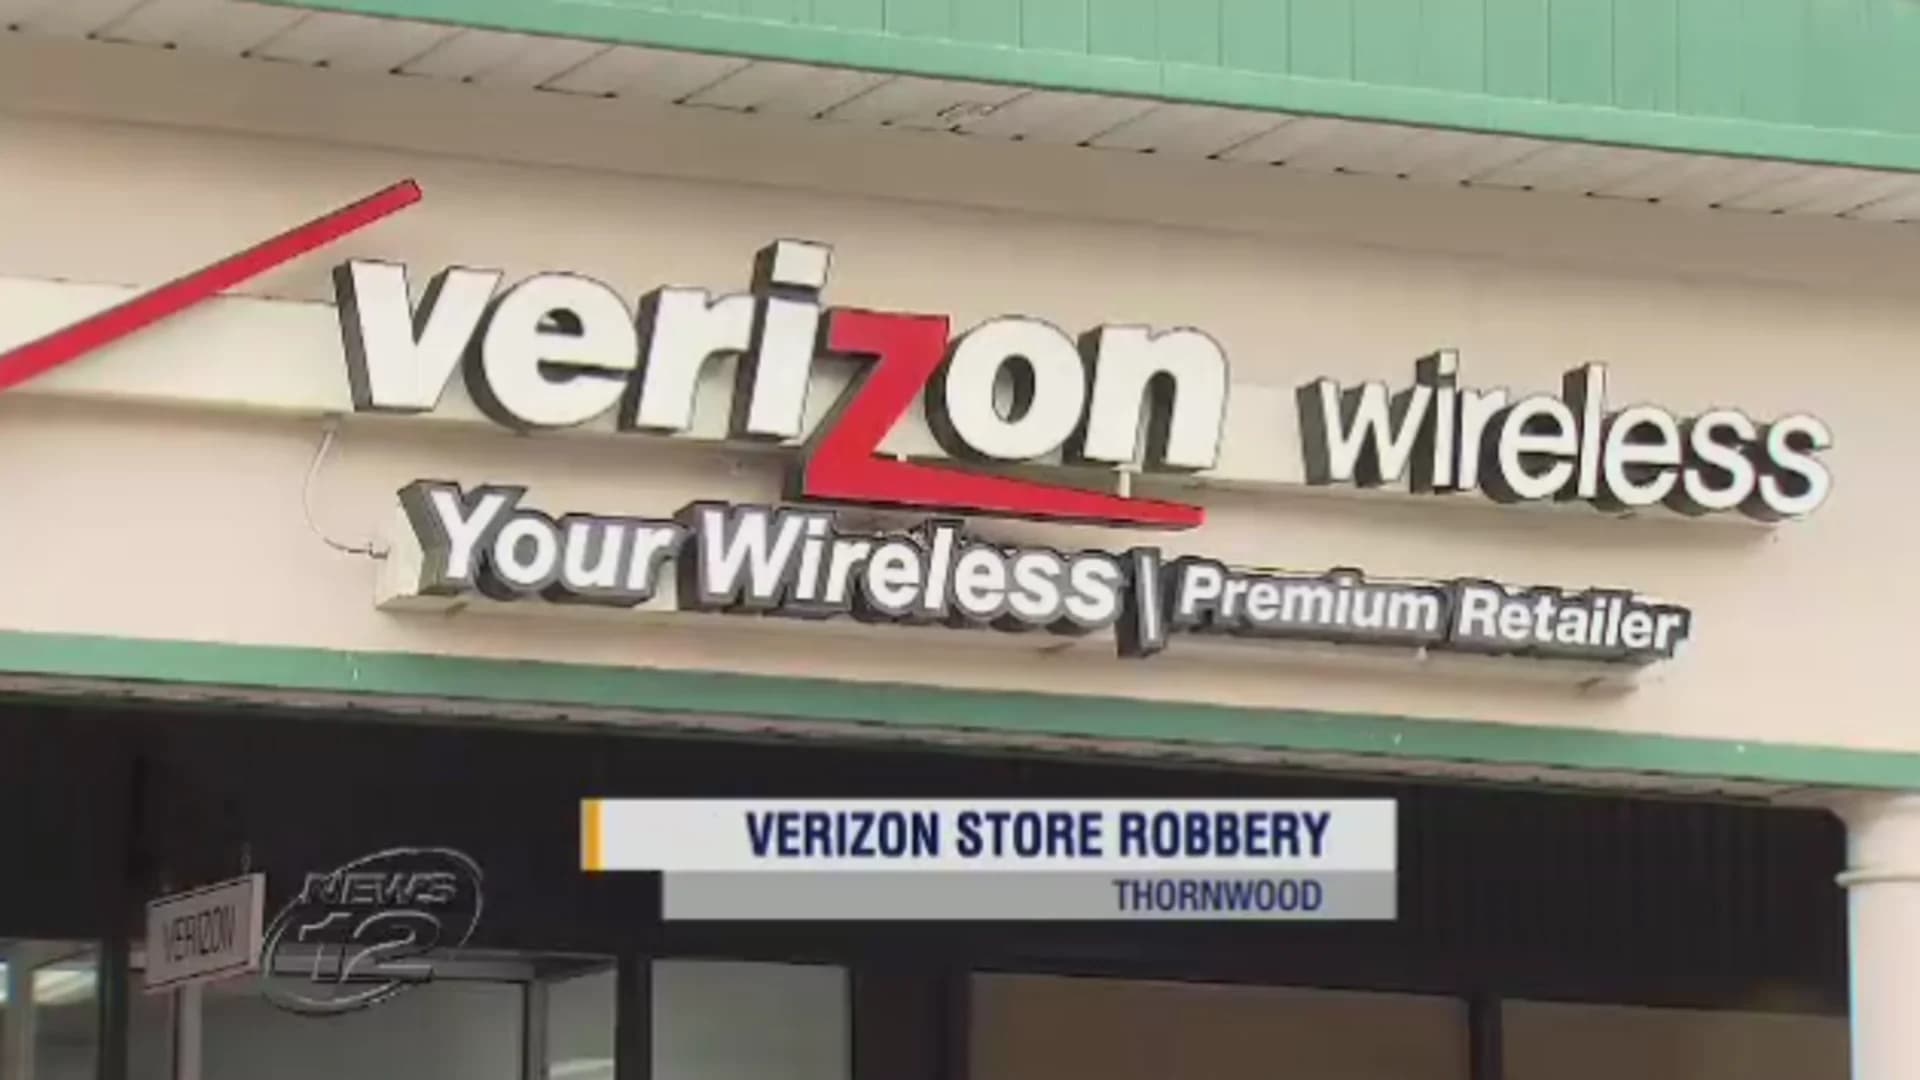 Armed robbers hold up Verizon retailer store in Thornwood